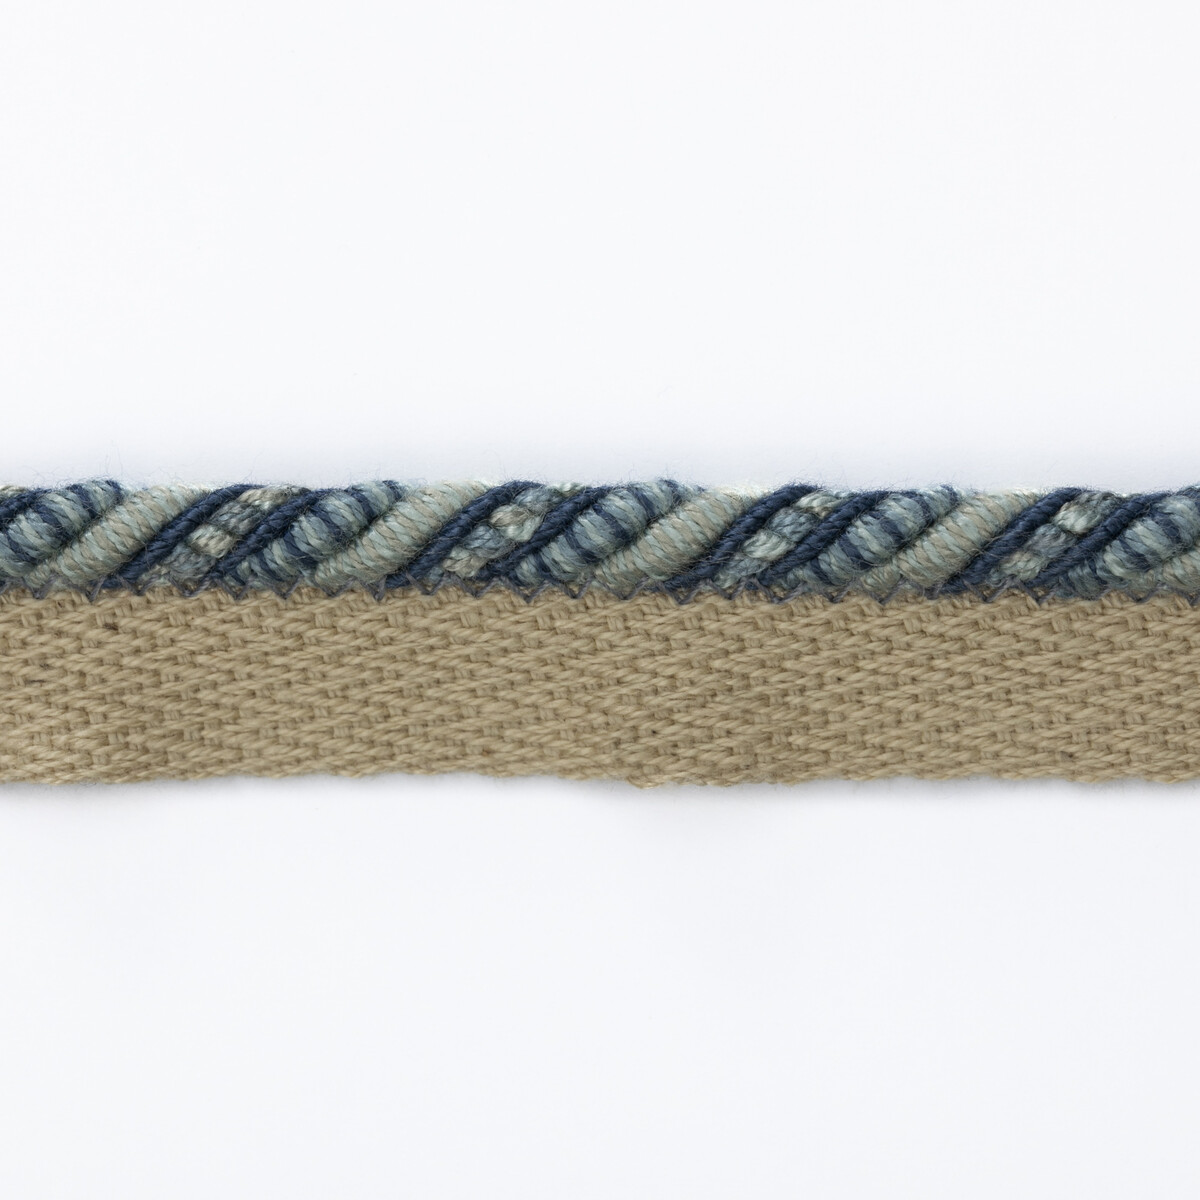 G P & J Baker T6032.635.0 Perandor Small Cord (flange) Trim Fabric in Blue